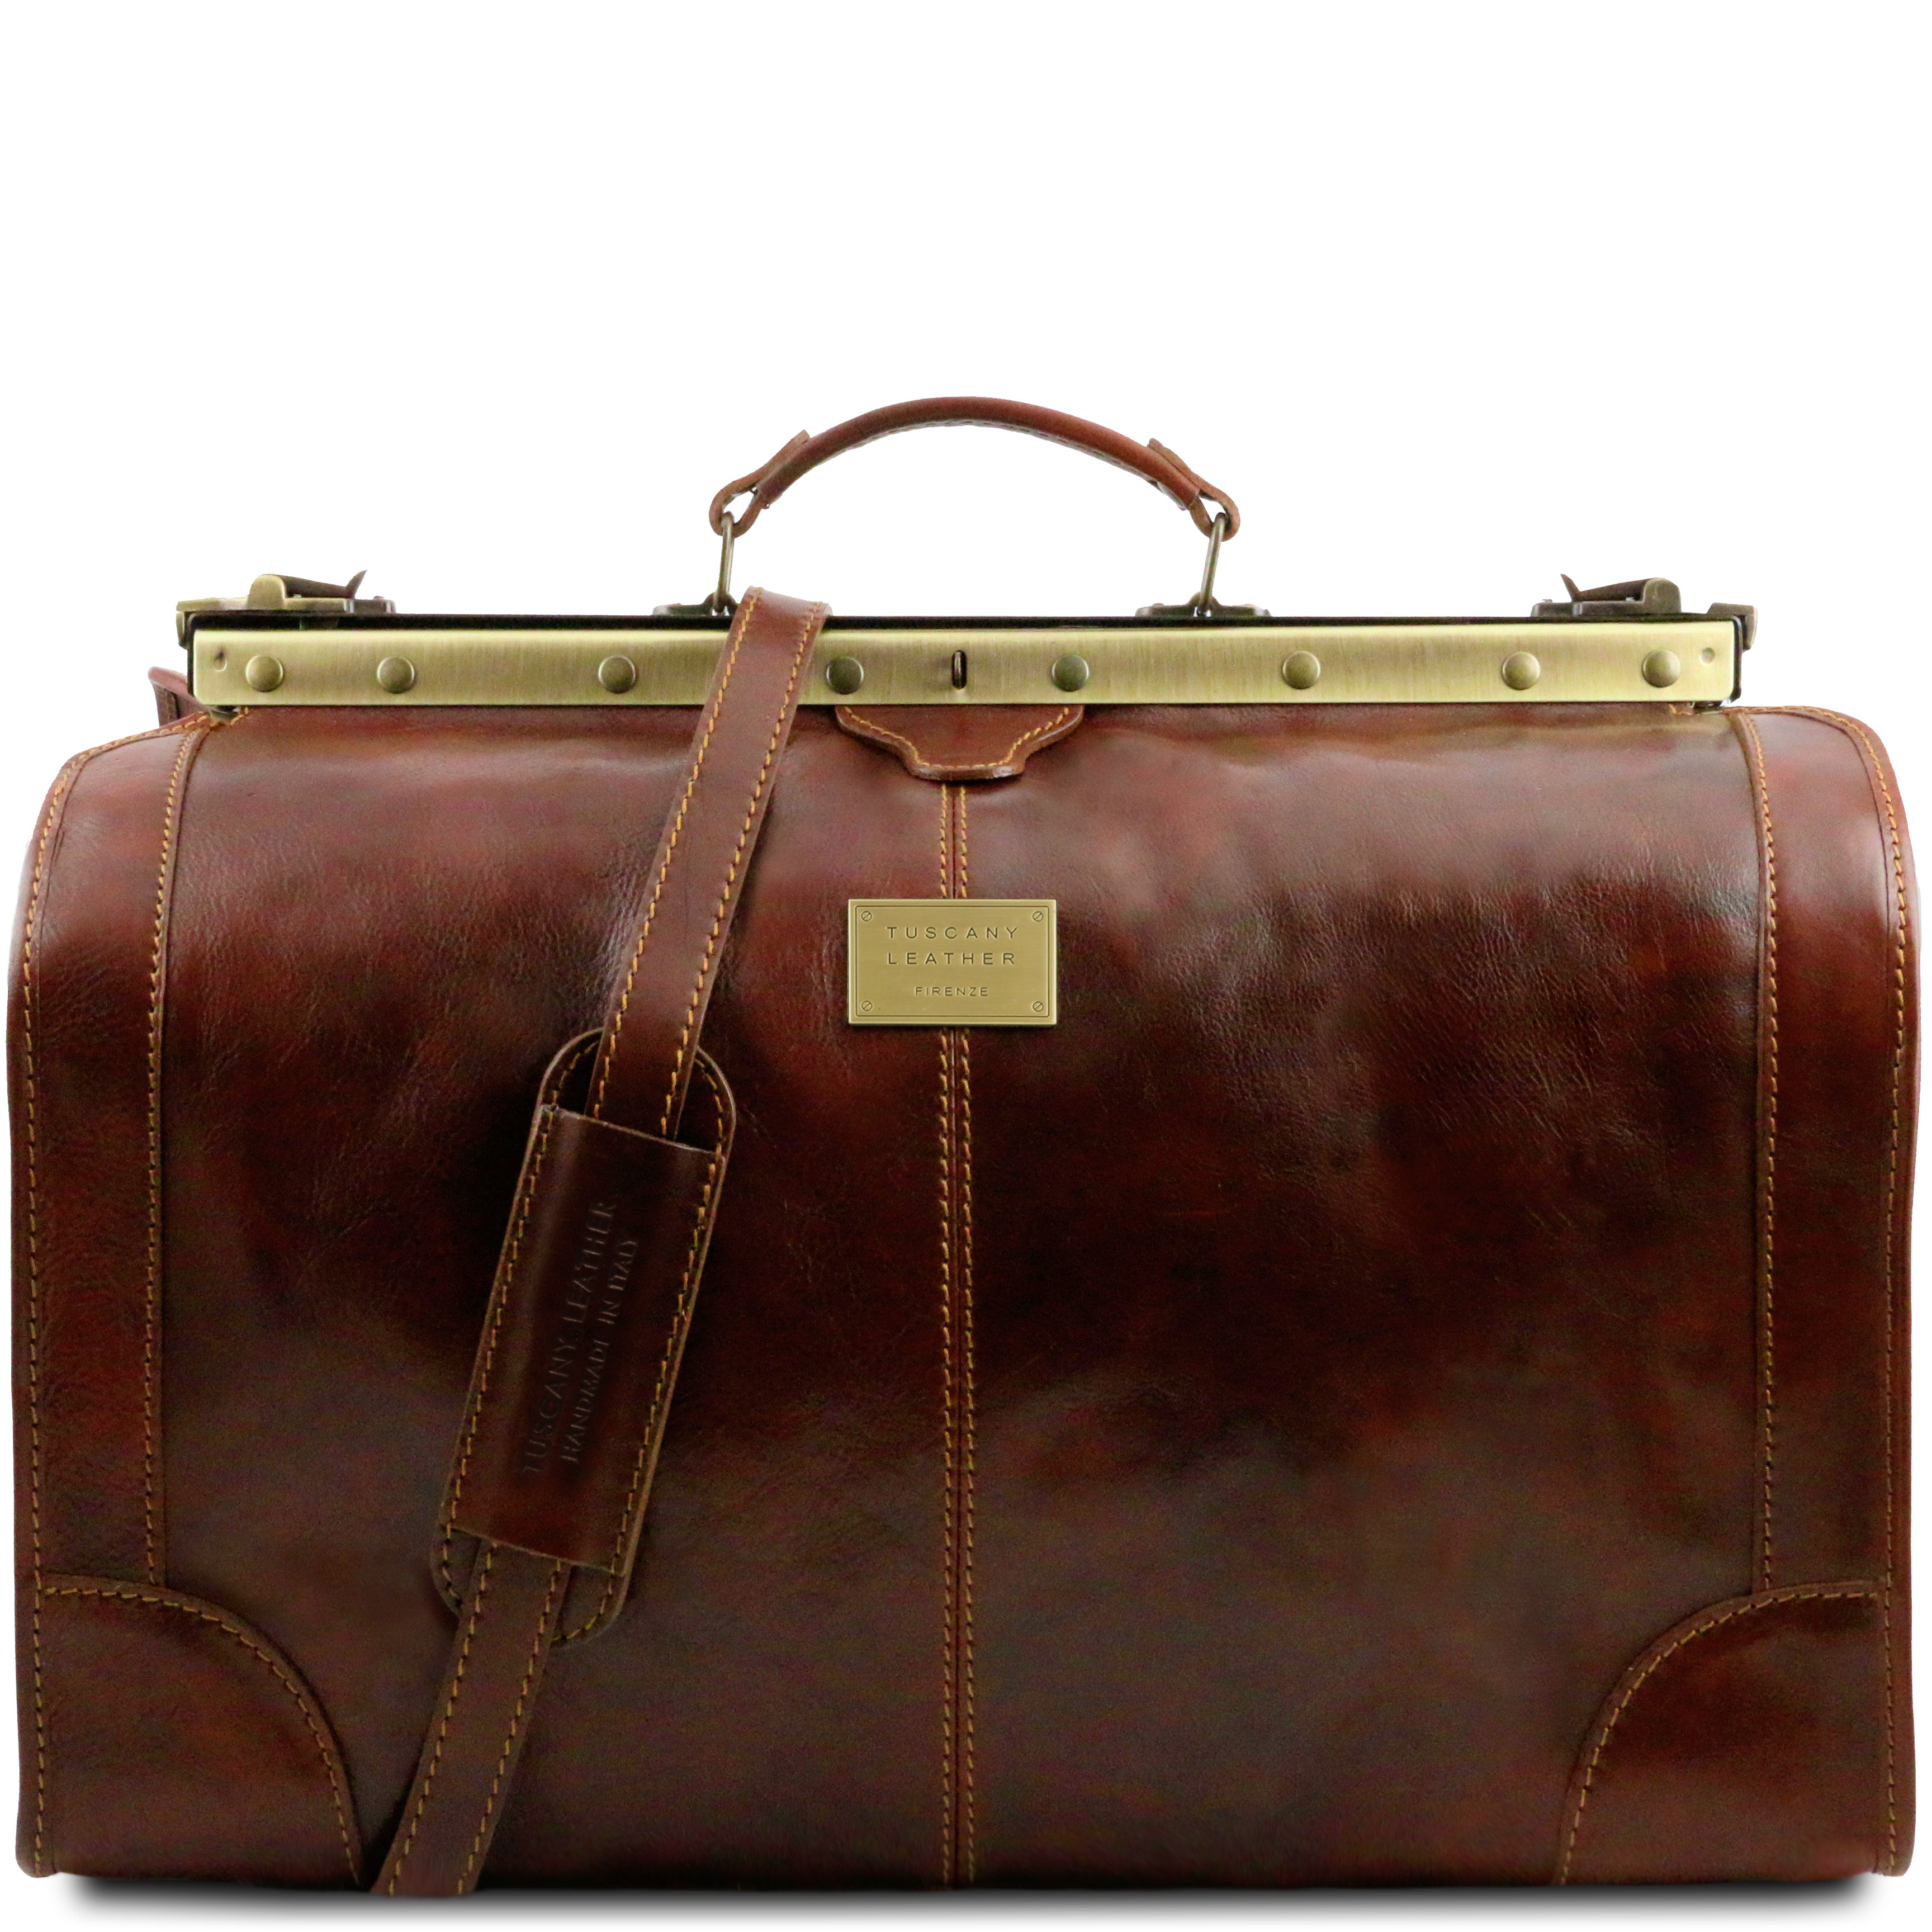 Madrid Gladstone Leather Bag - Large size Brown